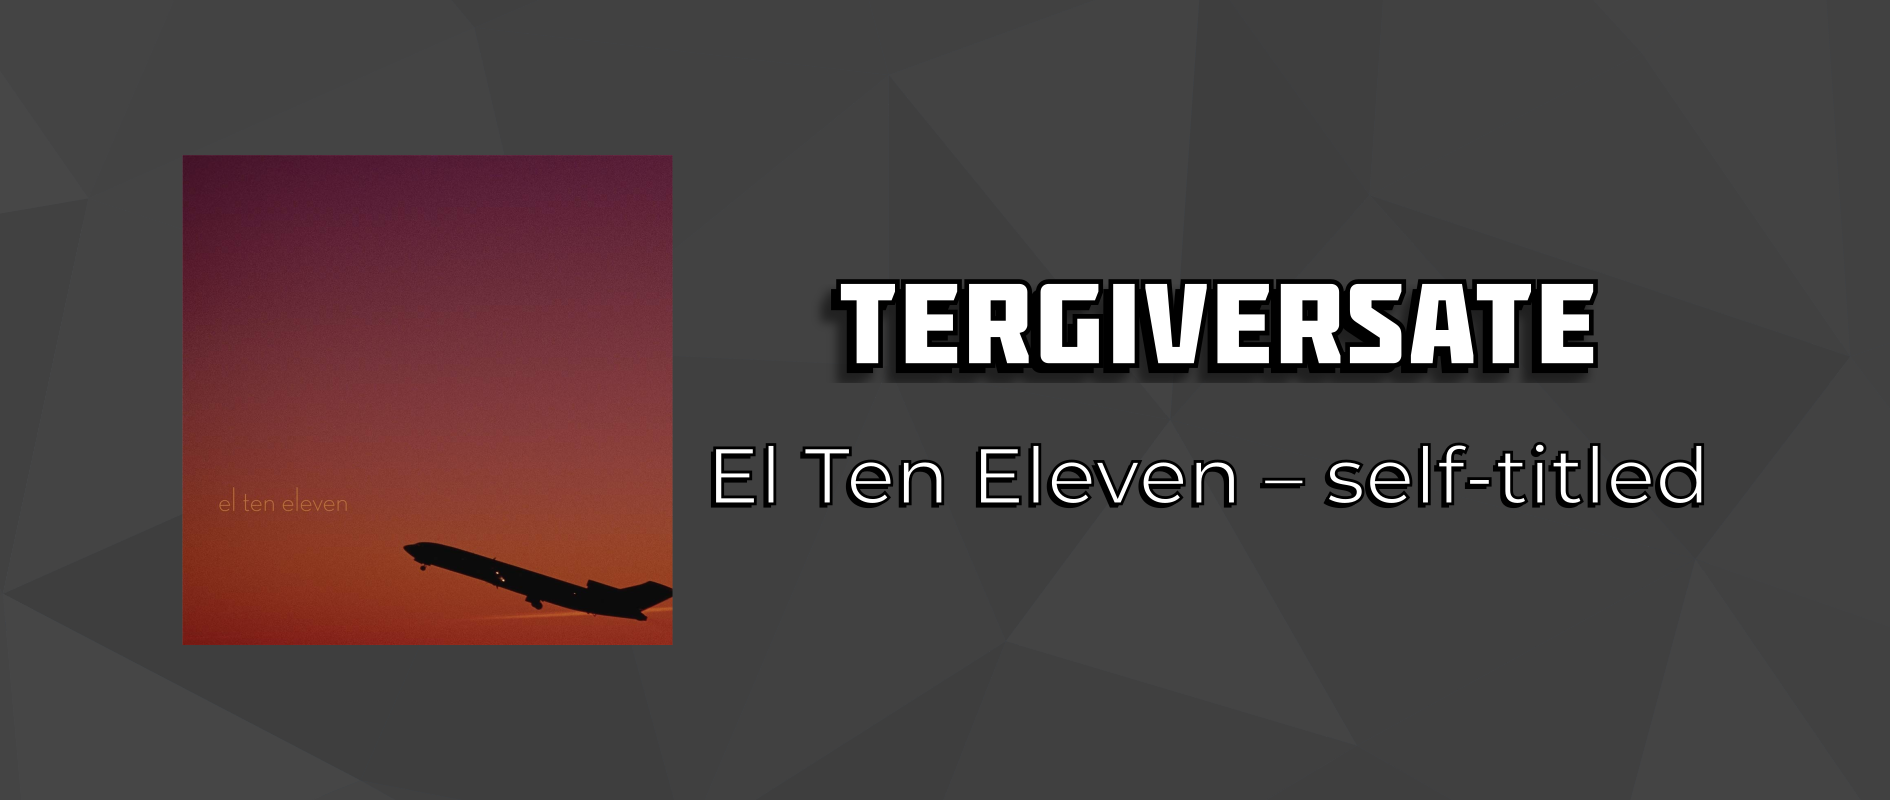 Tergiversate: El Ten Eleven self-titled debut